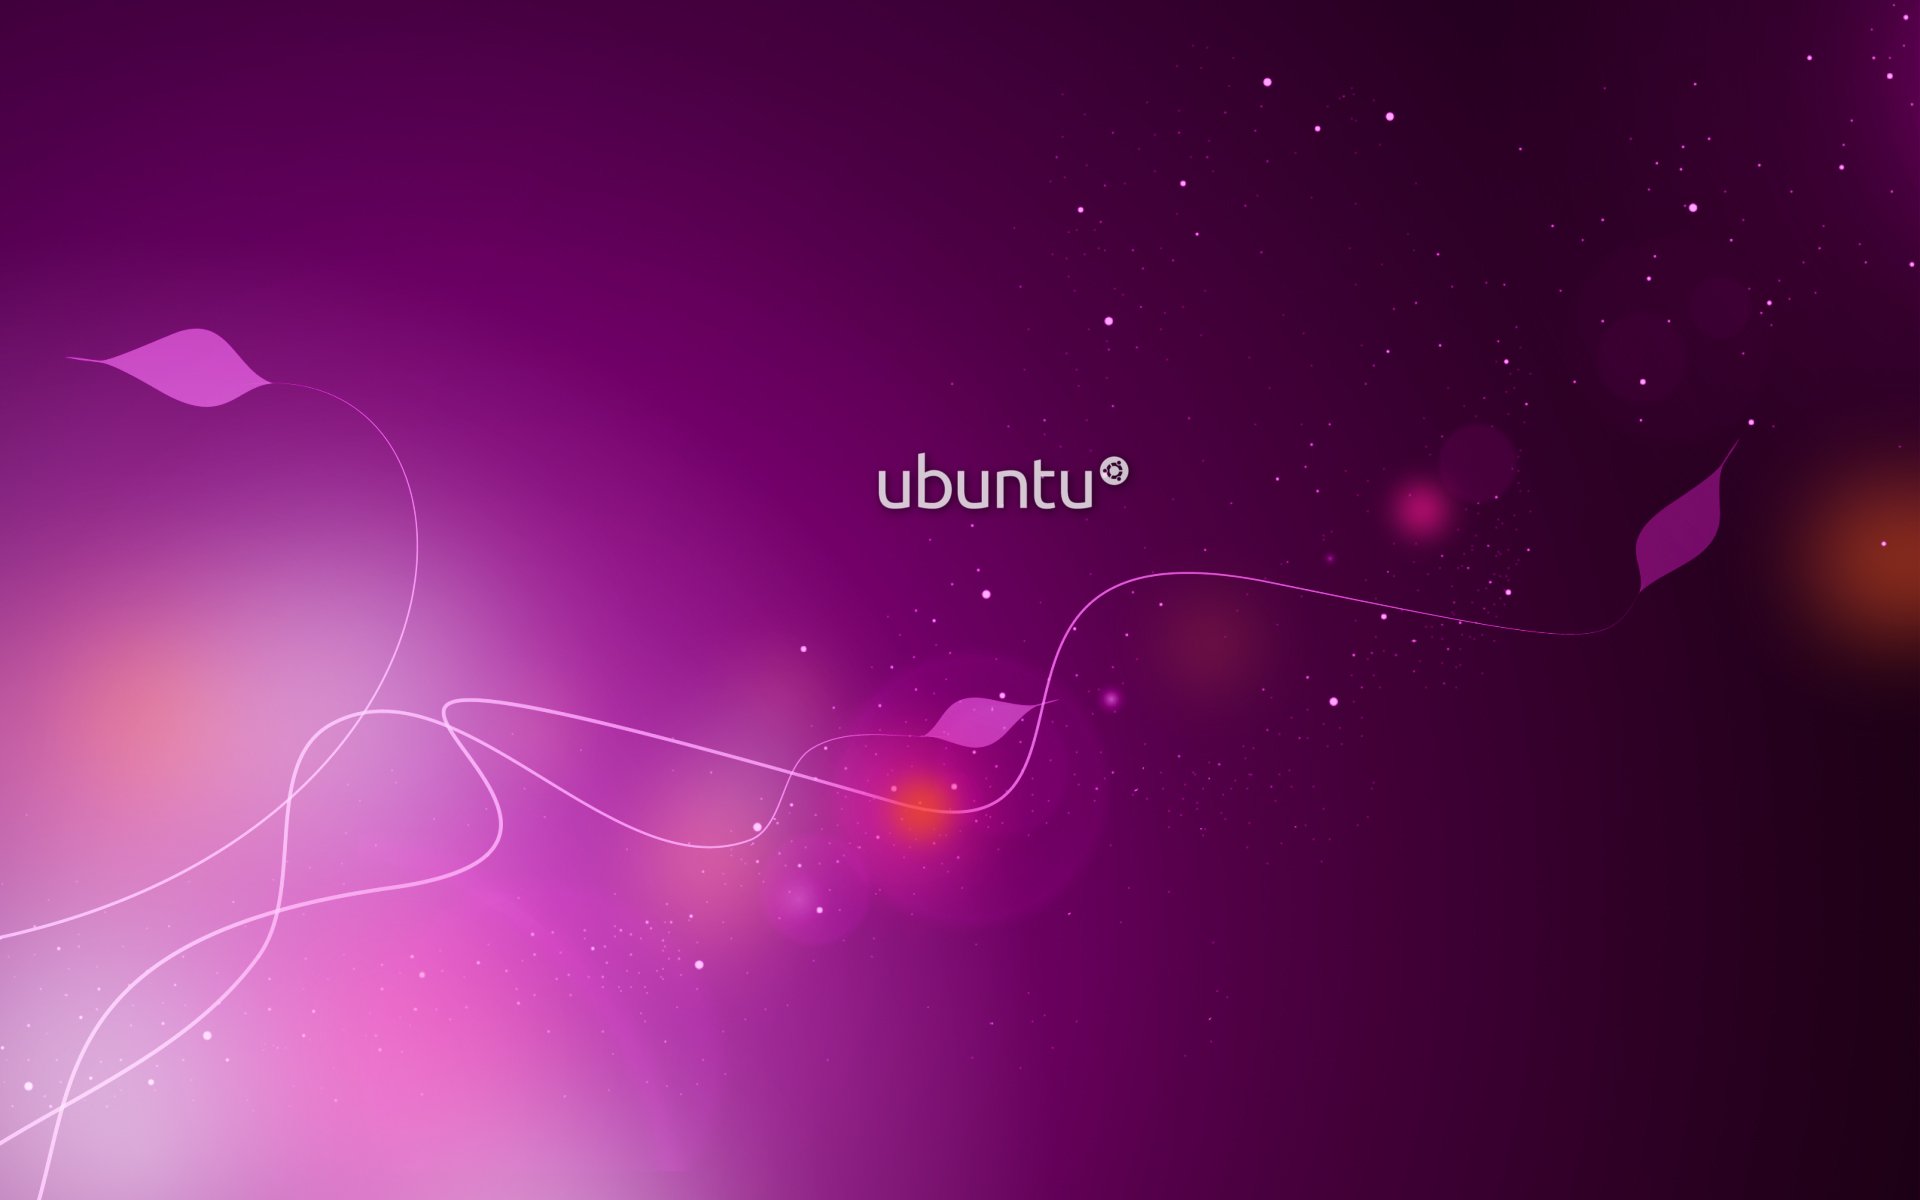 ubuntuの壁紙,バイオレット,紫の,ピンク,空,光